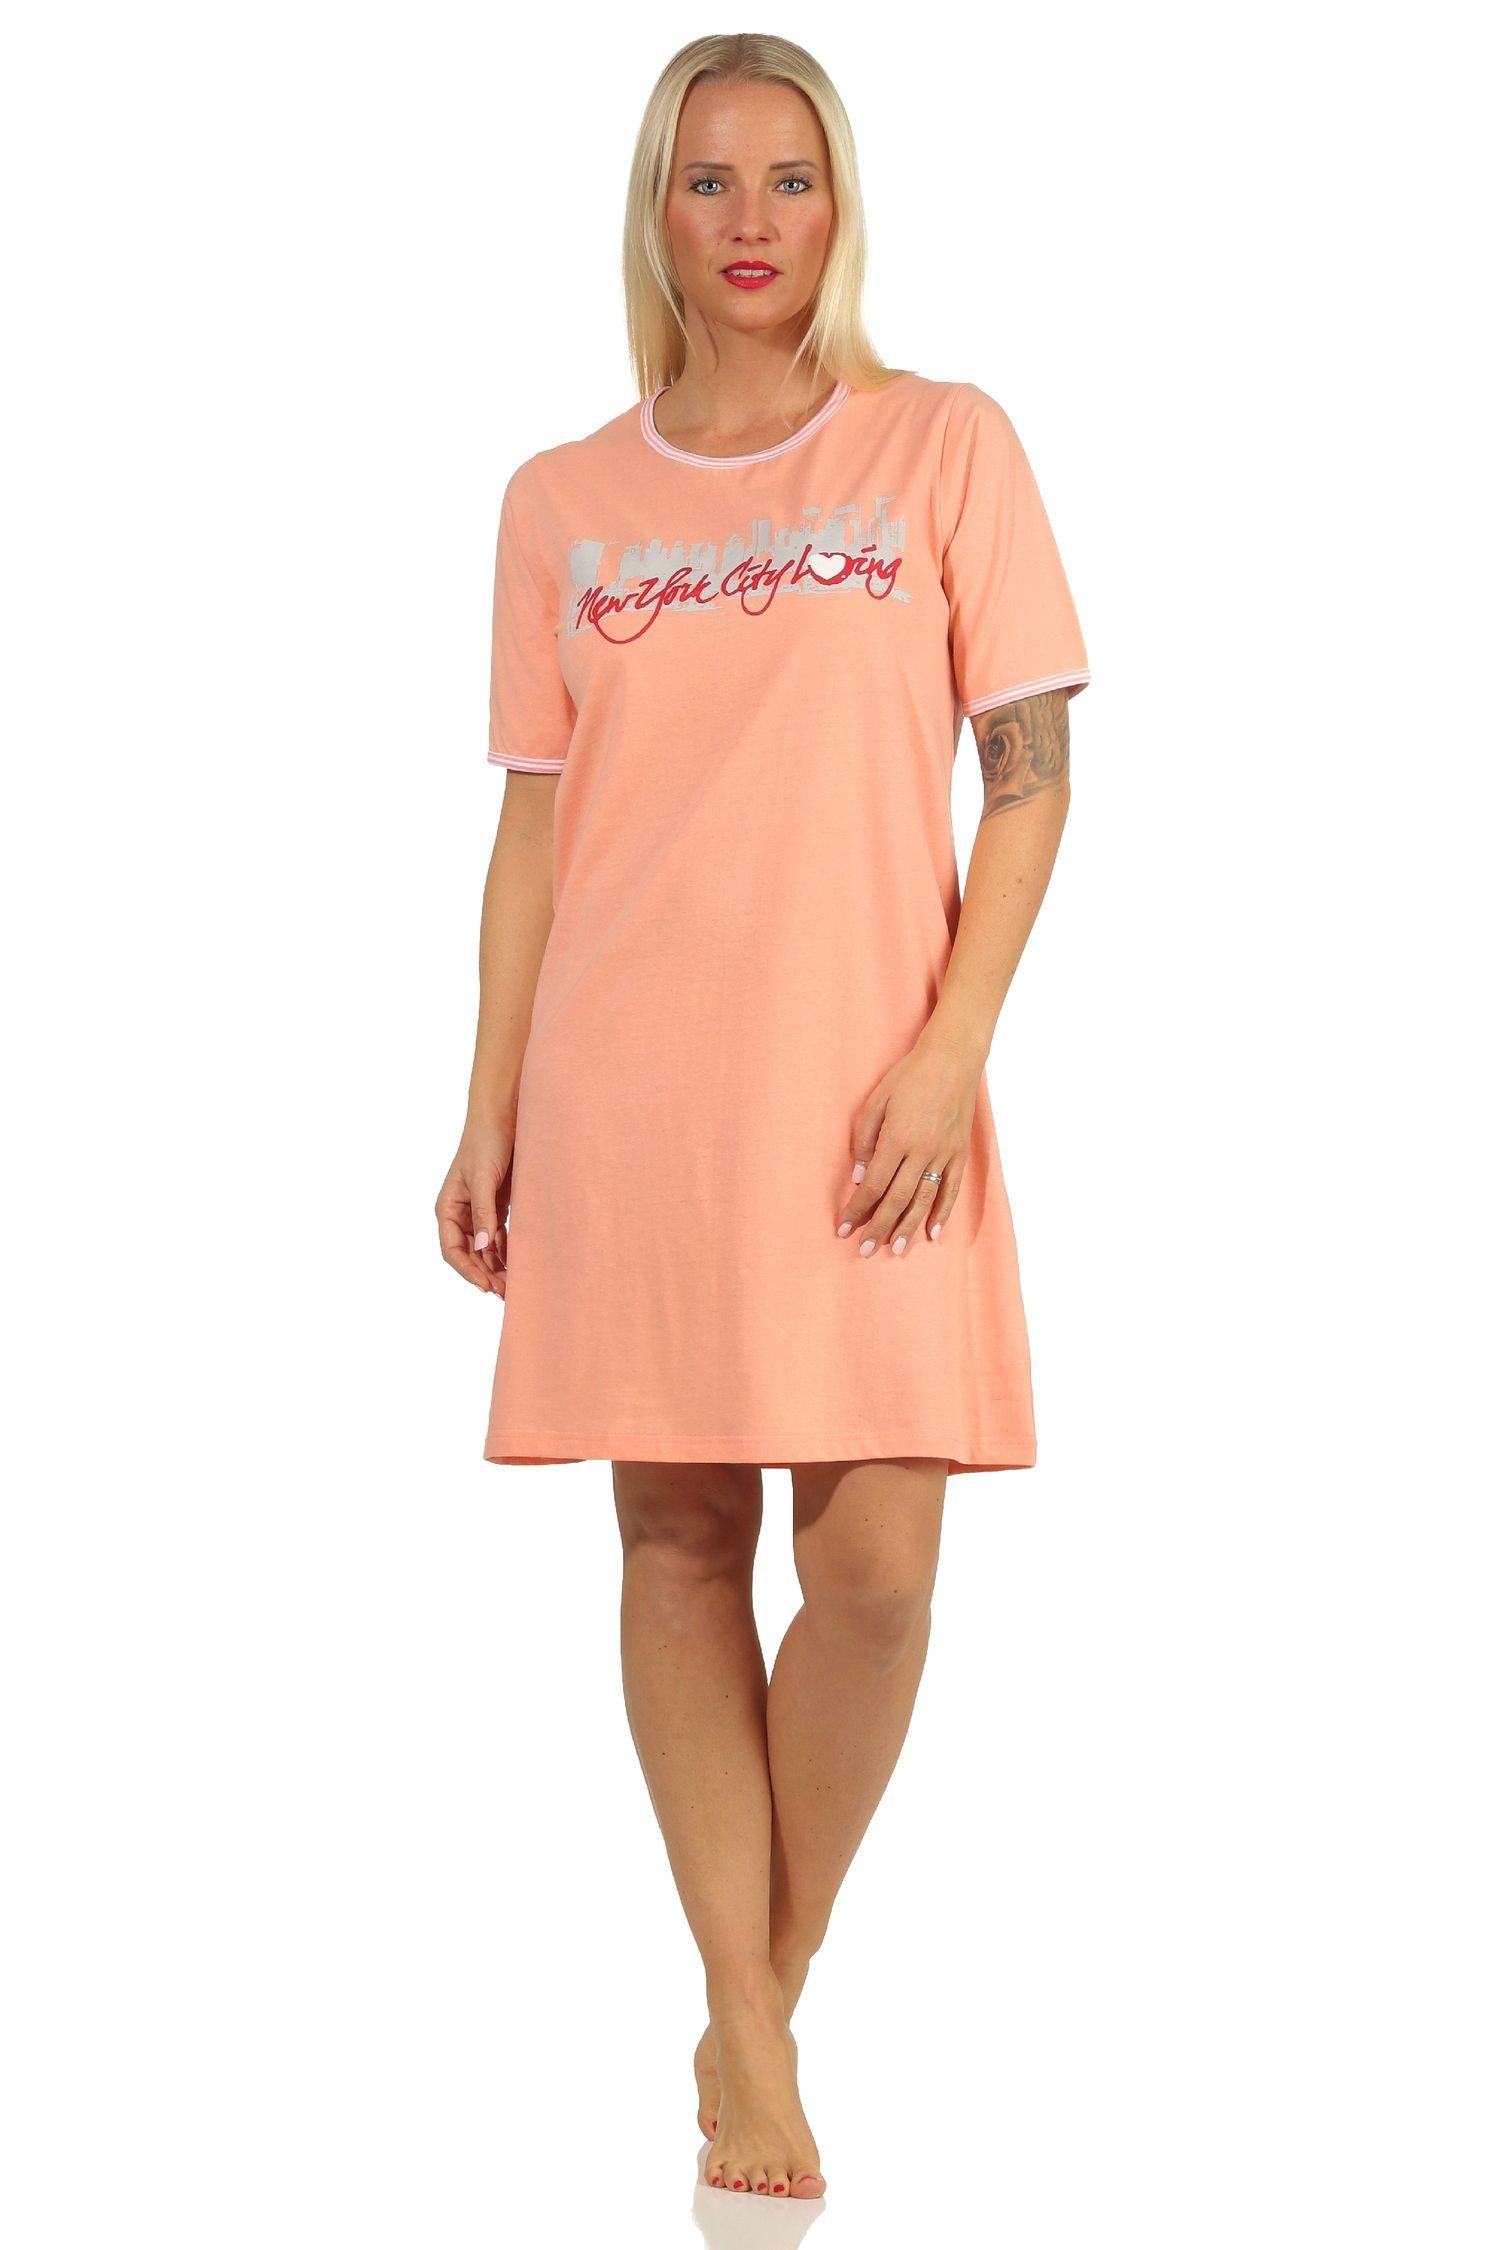 Normann Nachthemd Damen Nachthemd kurzarm mit Front-Print "New York City Loving" apricot